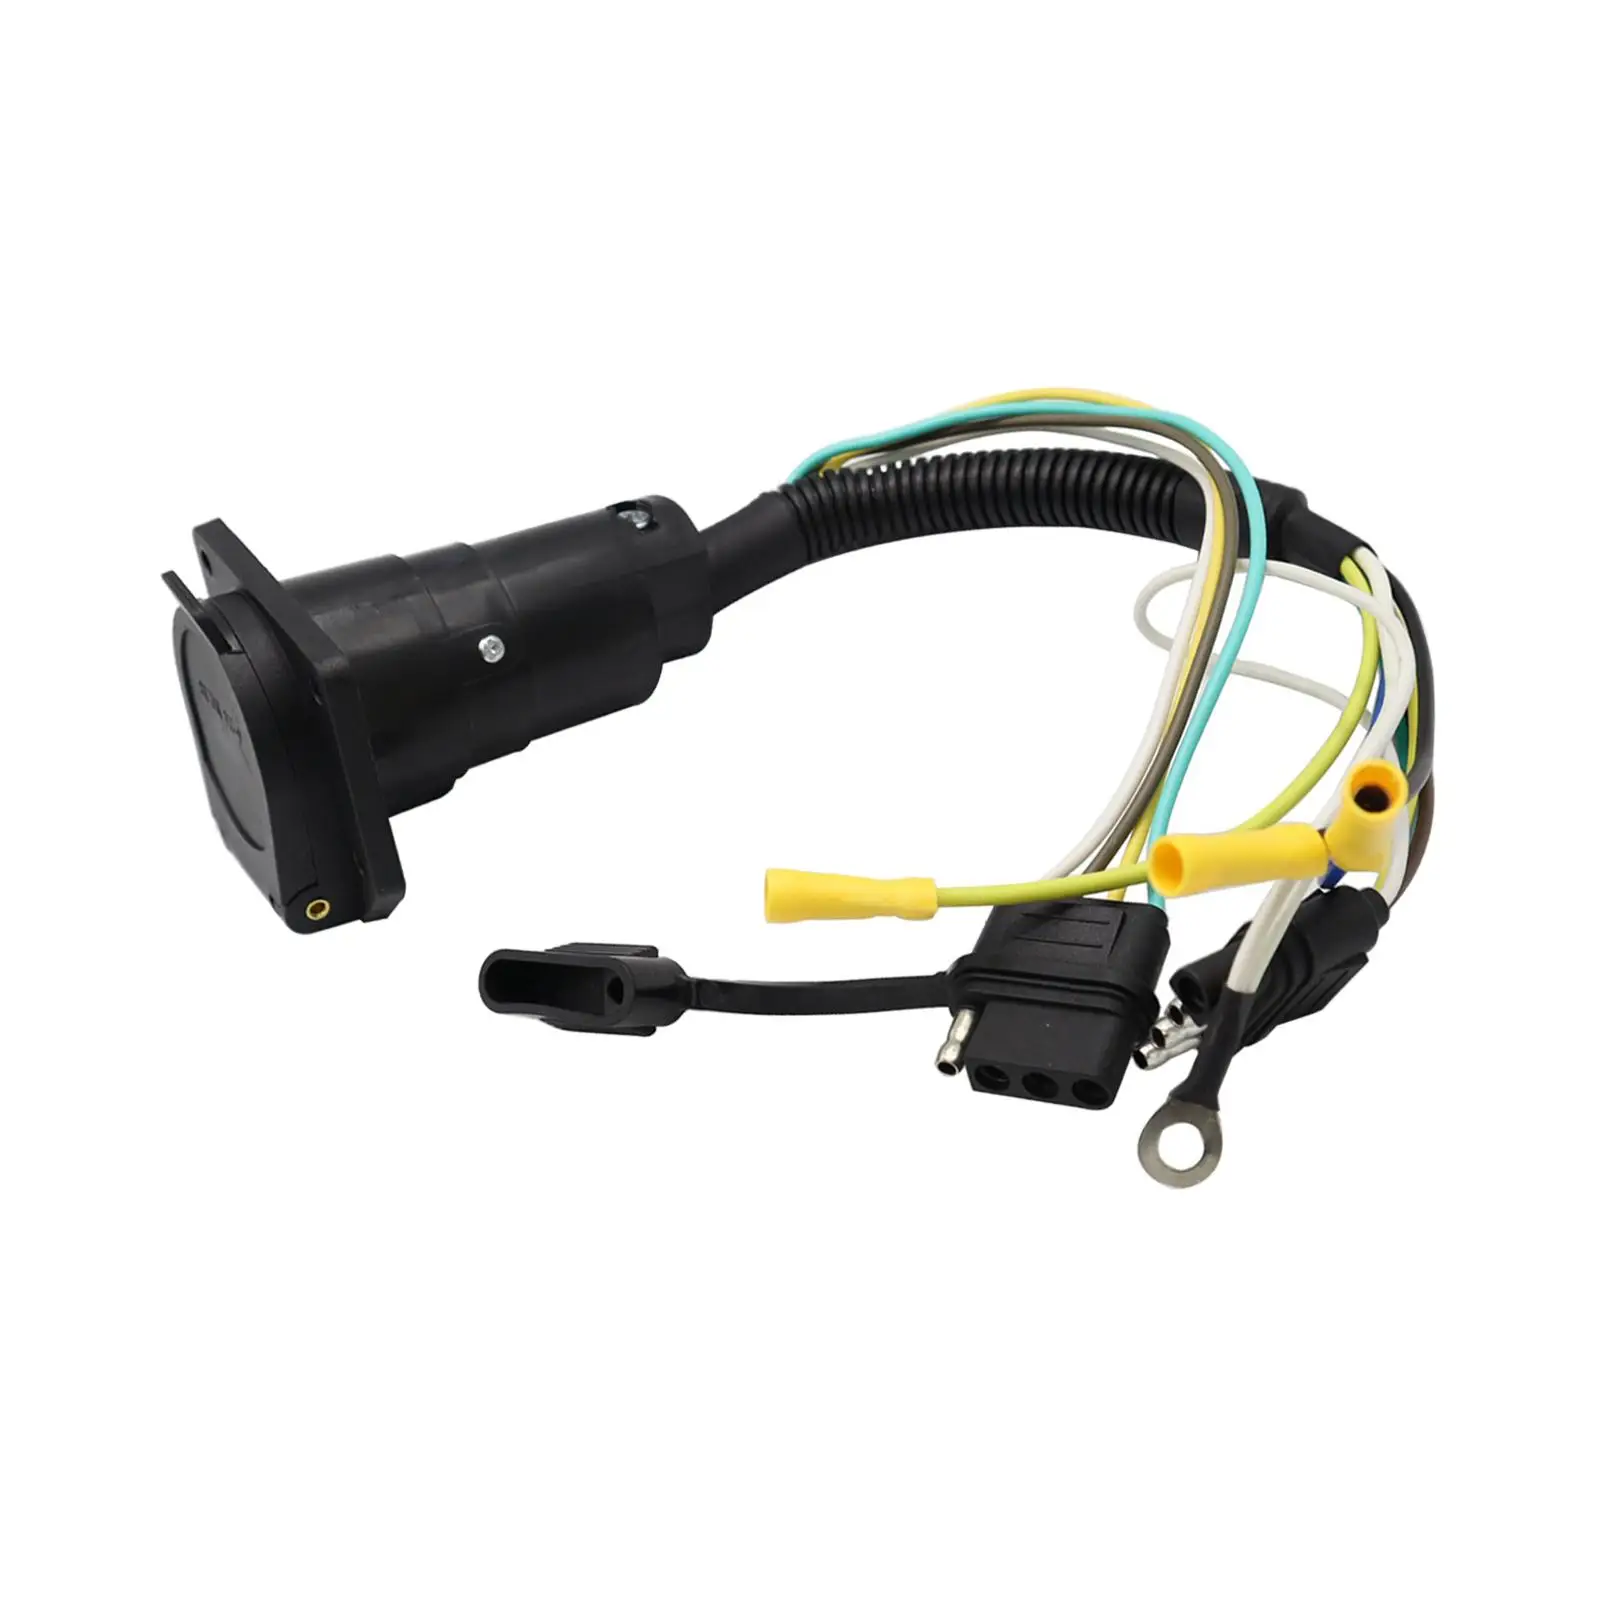 4-Way Flat Female Trailer Wiring RV Trailer Adapter Plug Professional Easy Installation Trailer Wiring Adapter for Trailer